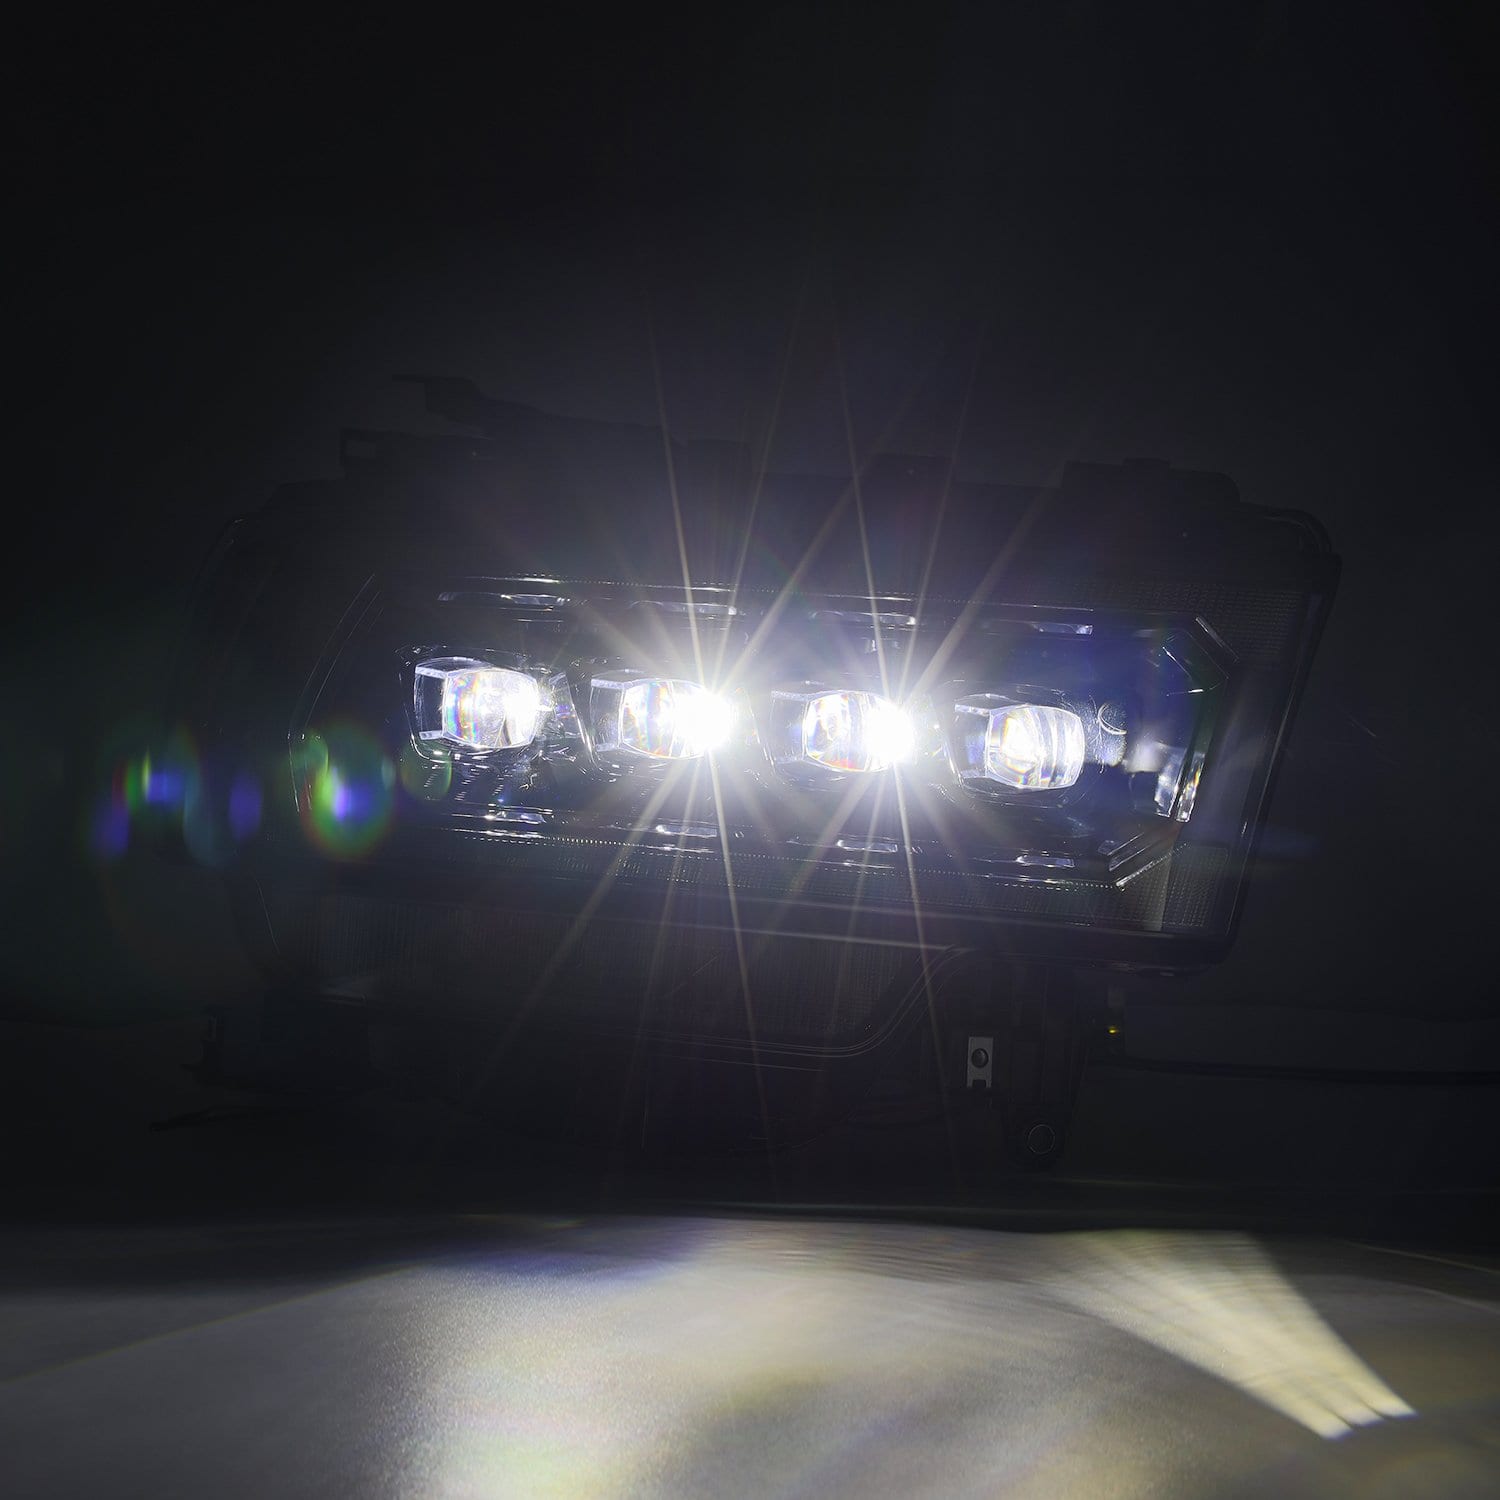 ALPHAREX NOVA LED Projector Headlights Alpha-Black RAM 2019-22 2500/3500